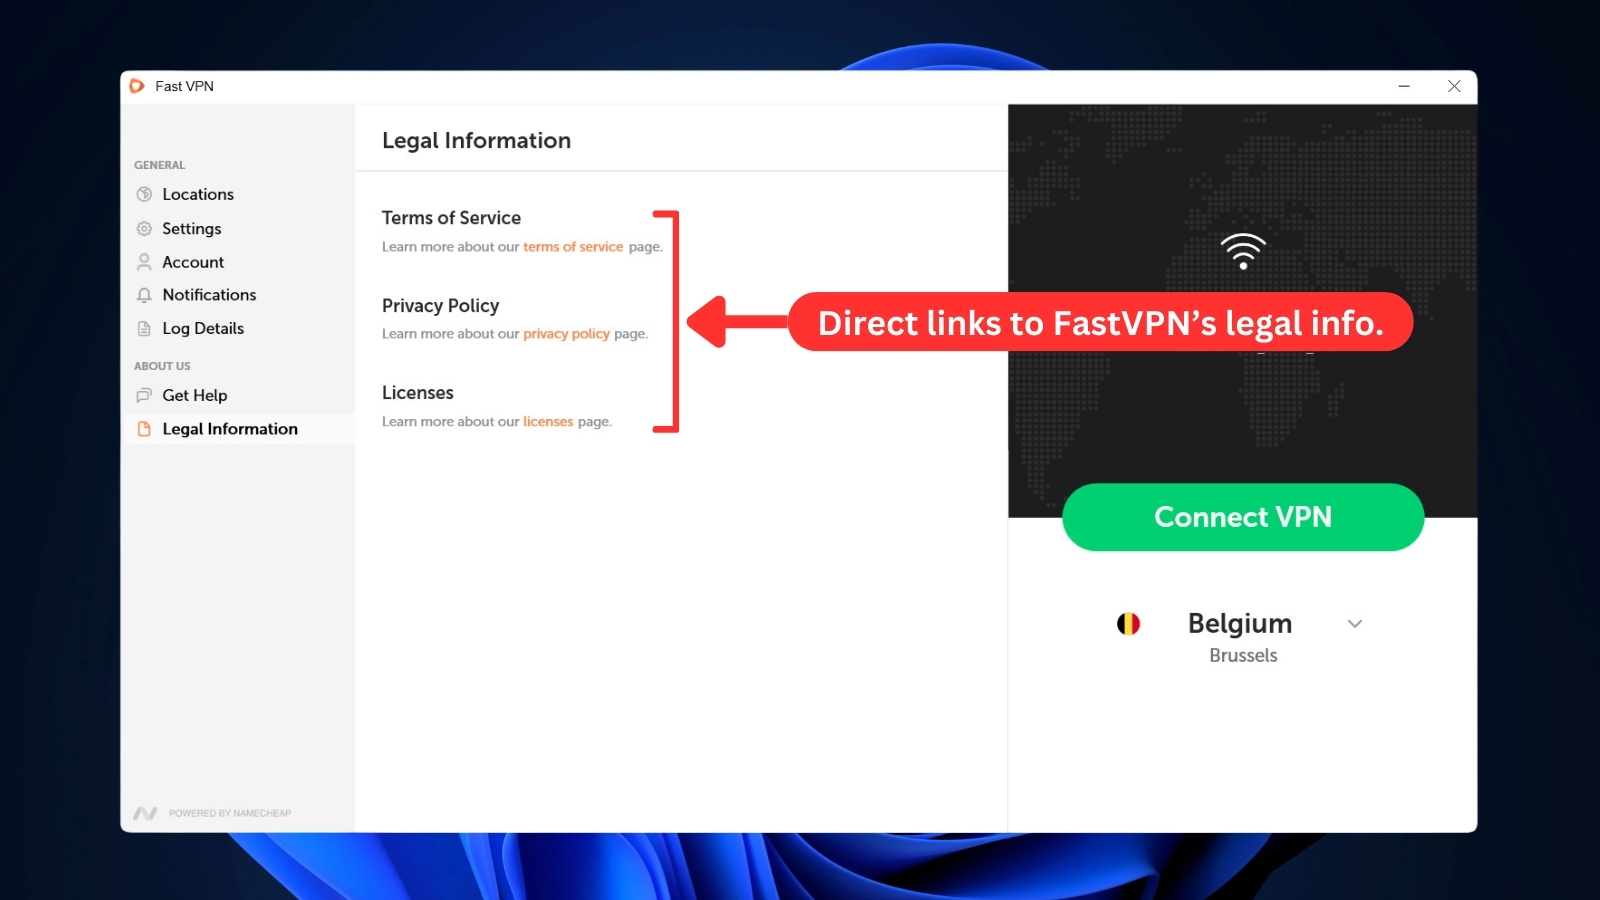 FastVPN Windows app showing direct links to legal information